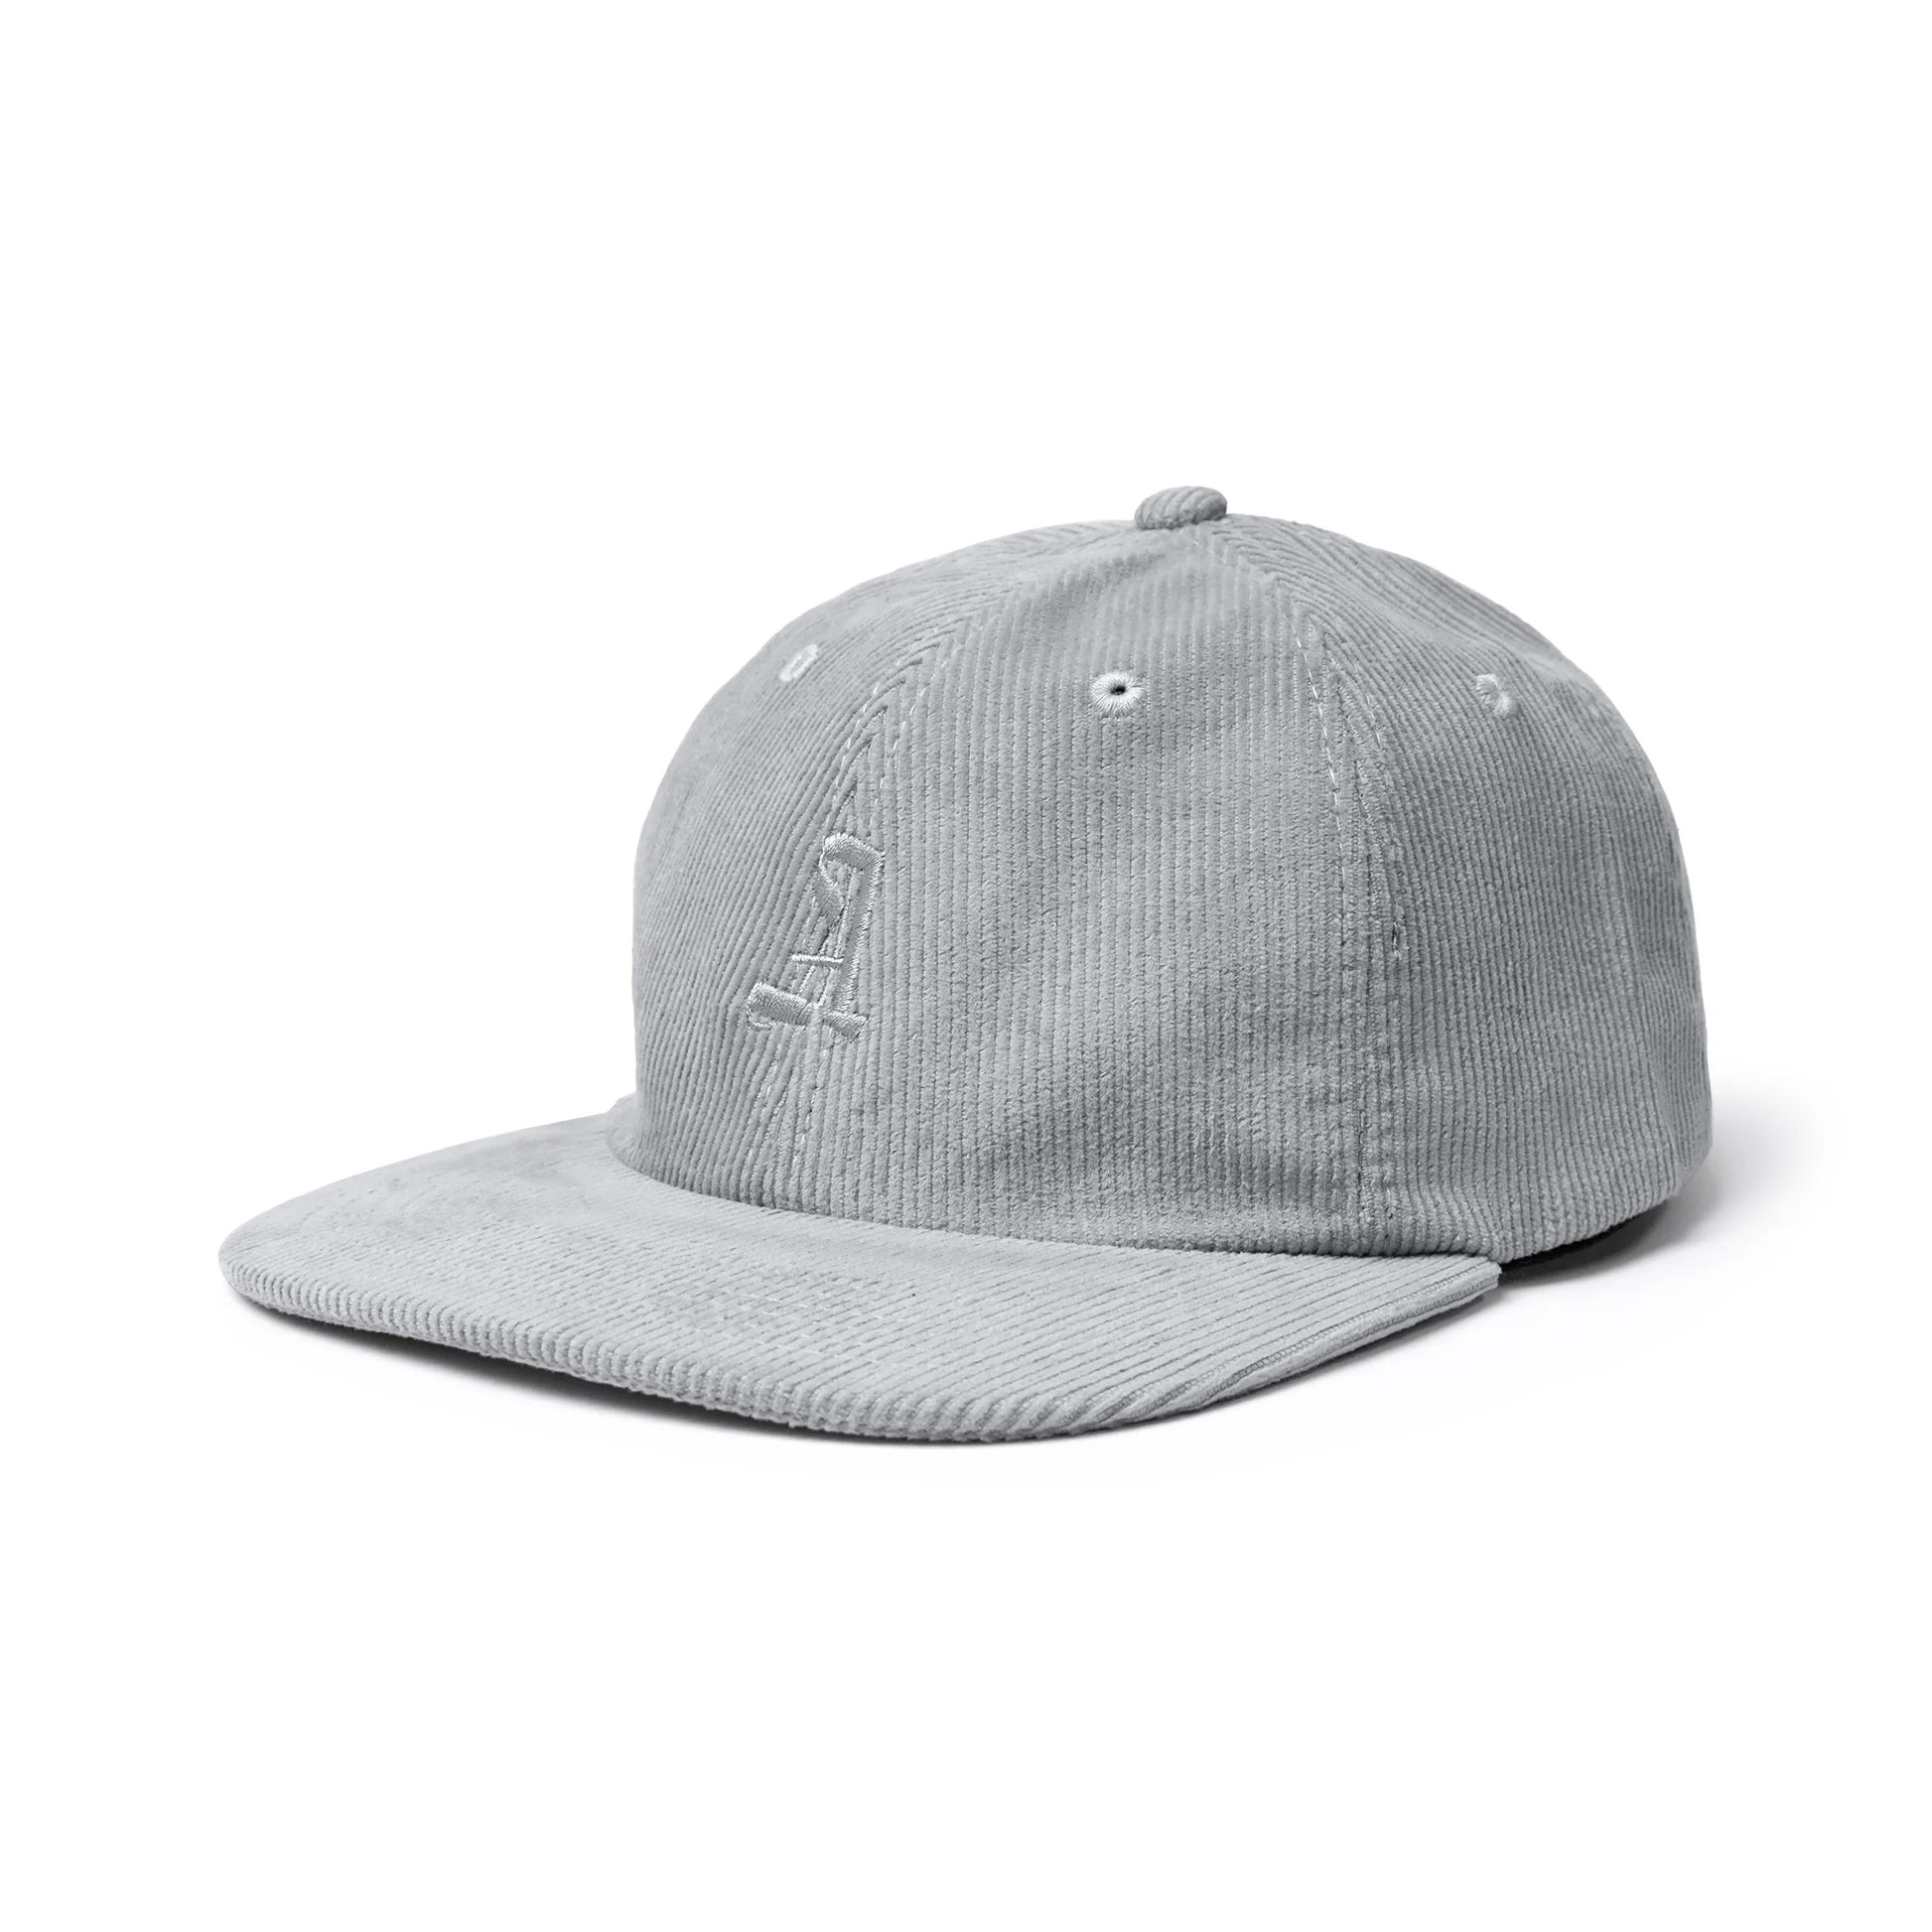 Corduroy Smoke Grey hat with A logo embroidery